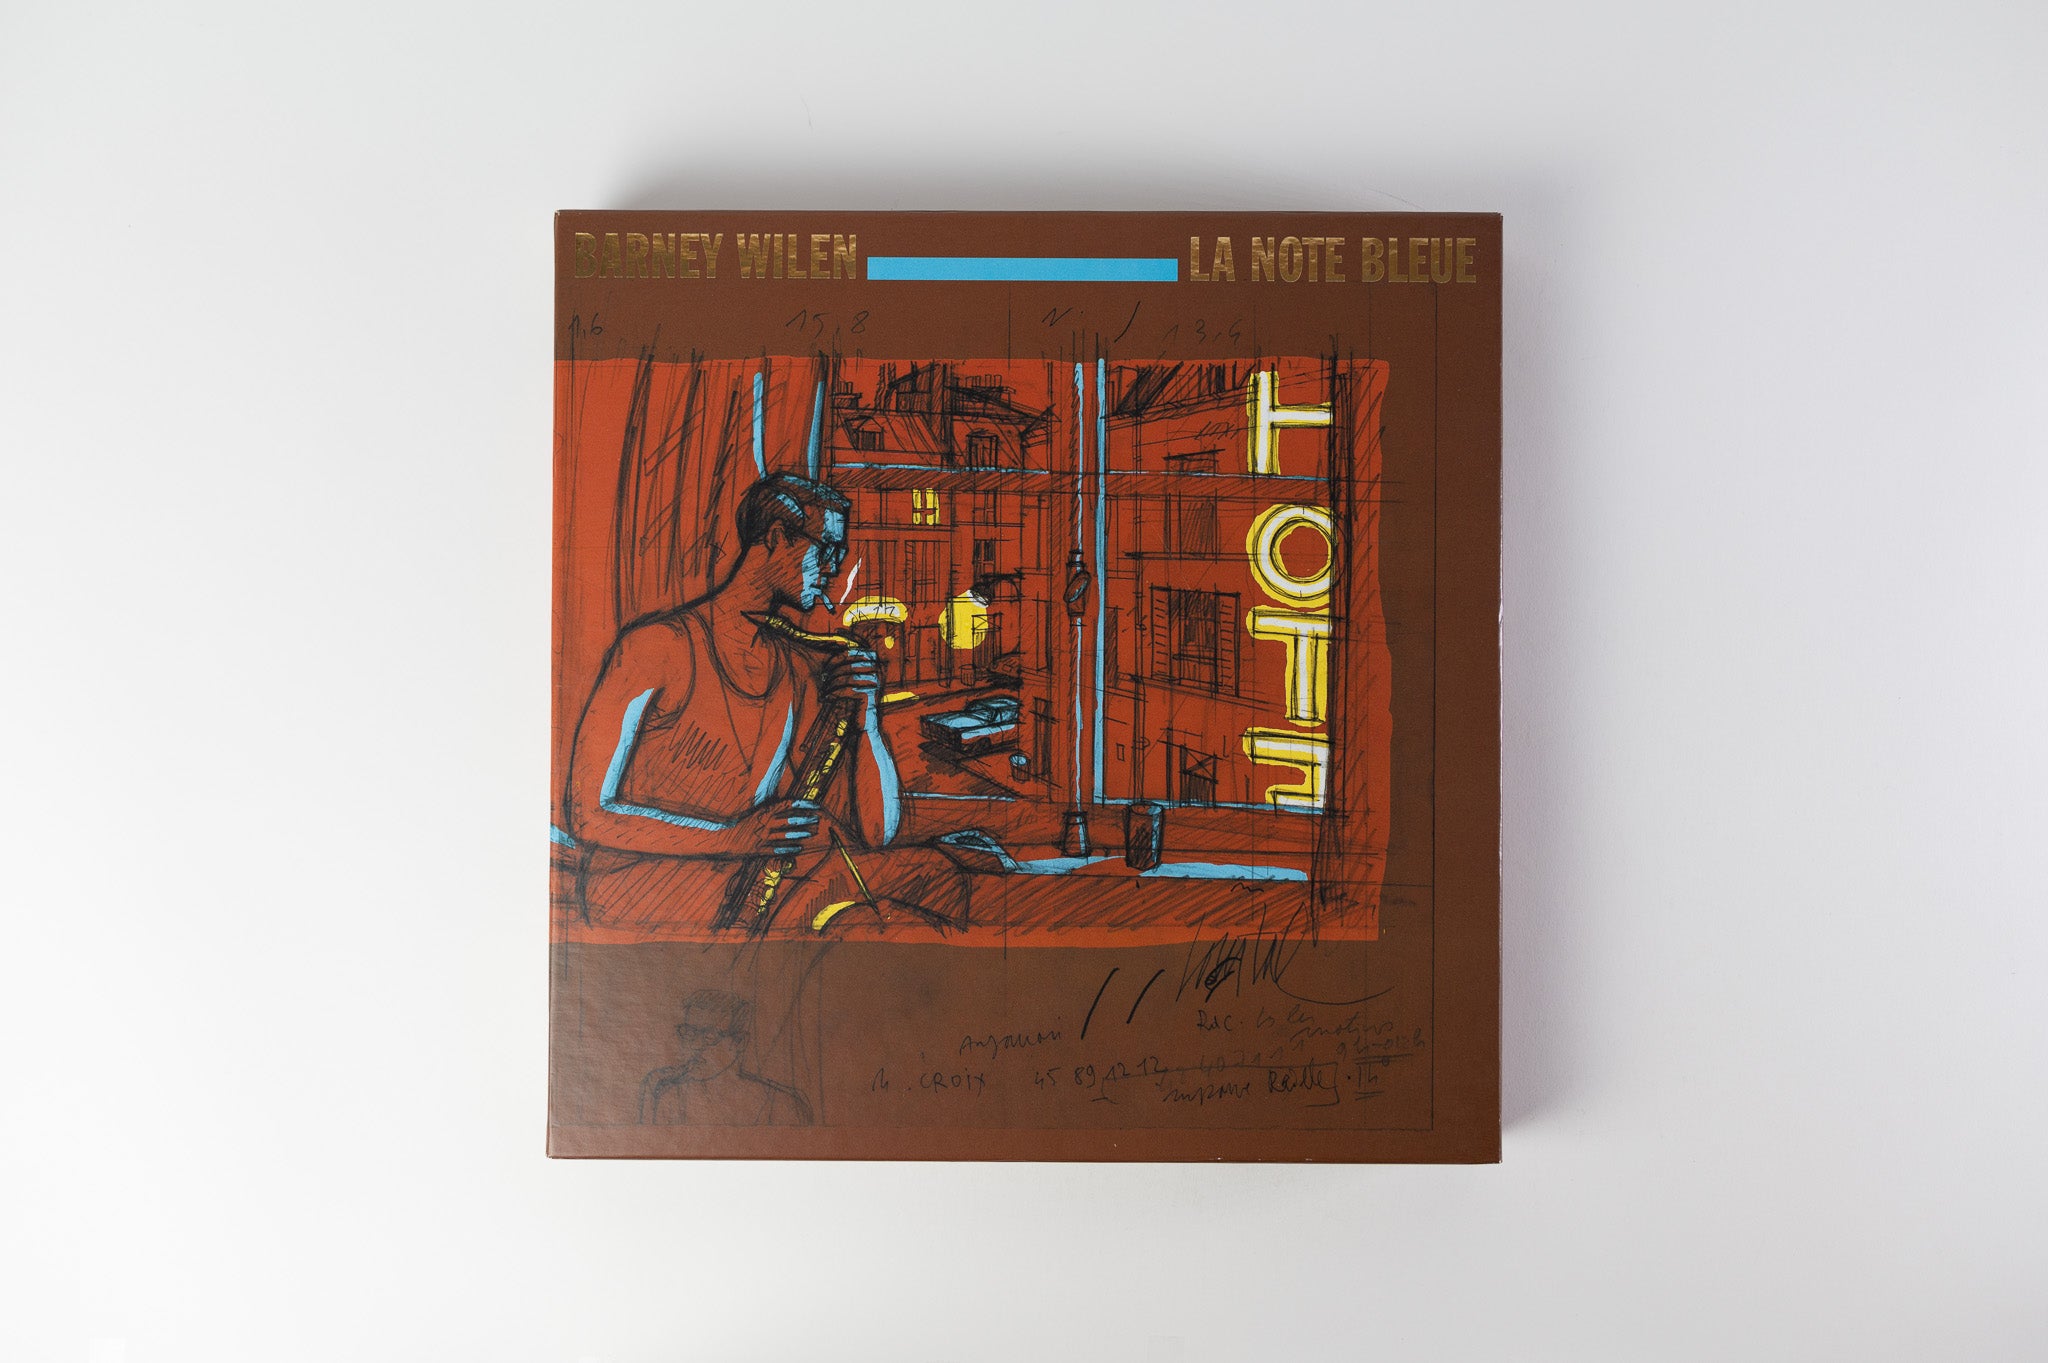 Barney Wilen - La Note Bleue on Elemental RSD Ltd Numbered Box Set